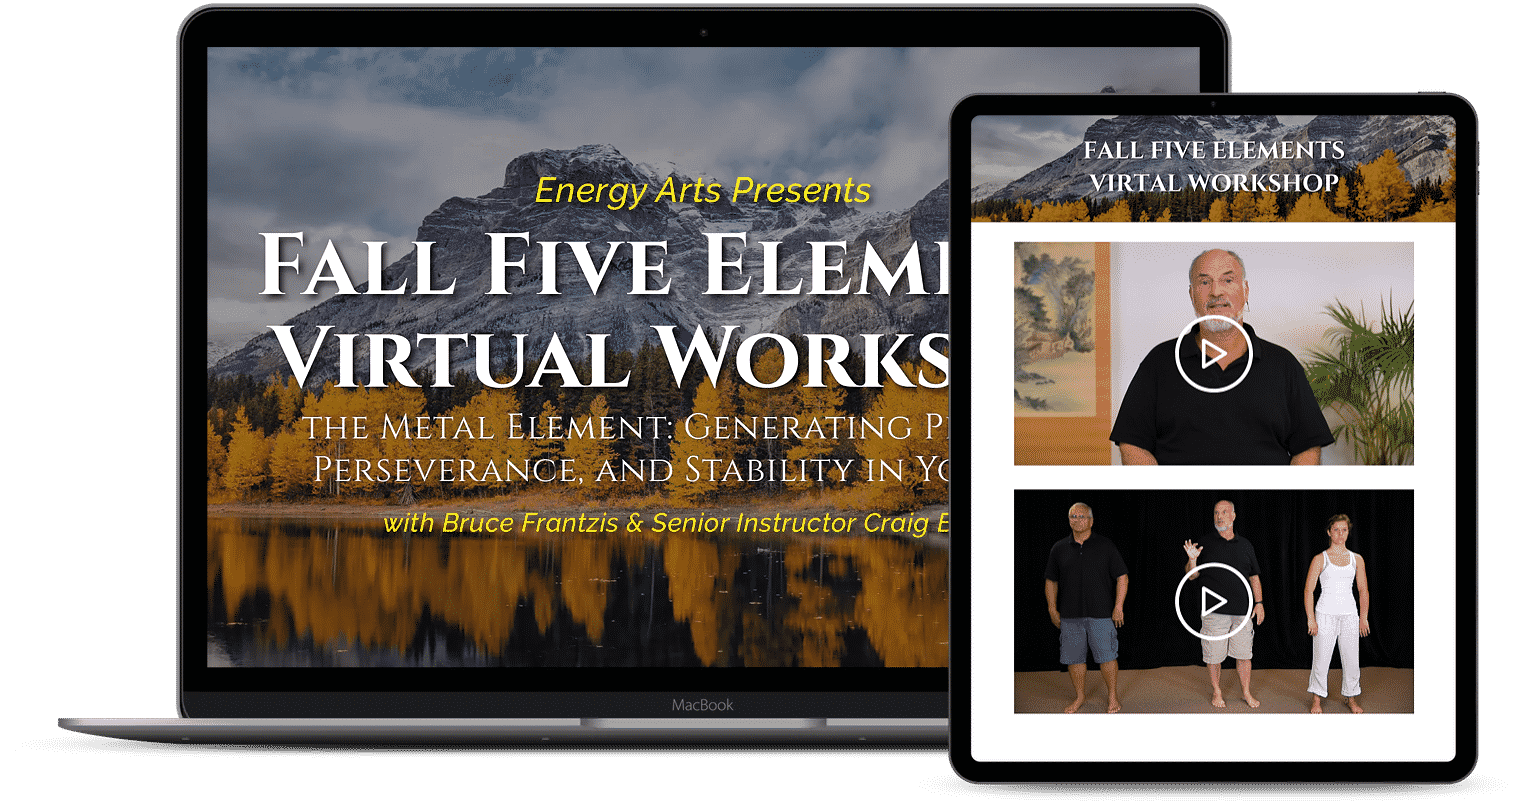 Five Elements Virtual Workshop: The Metal Element - Bruce Frantzis